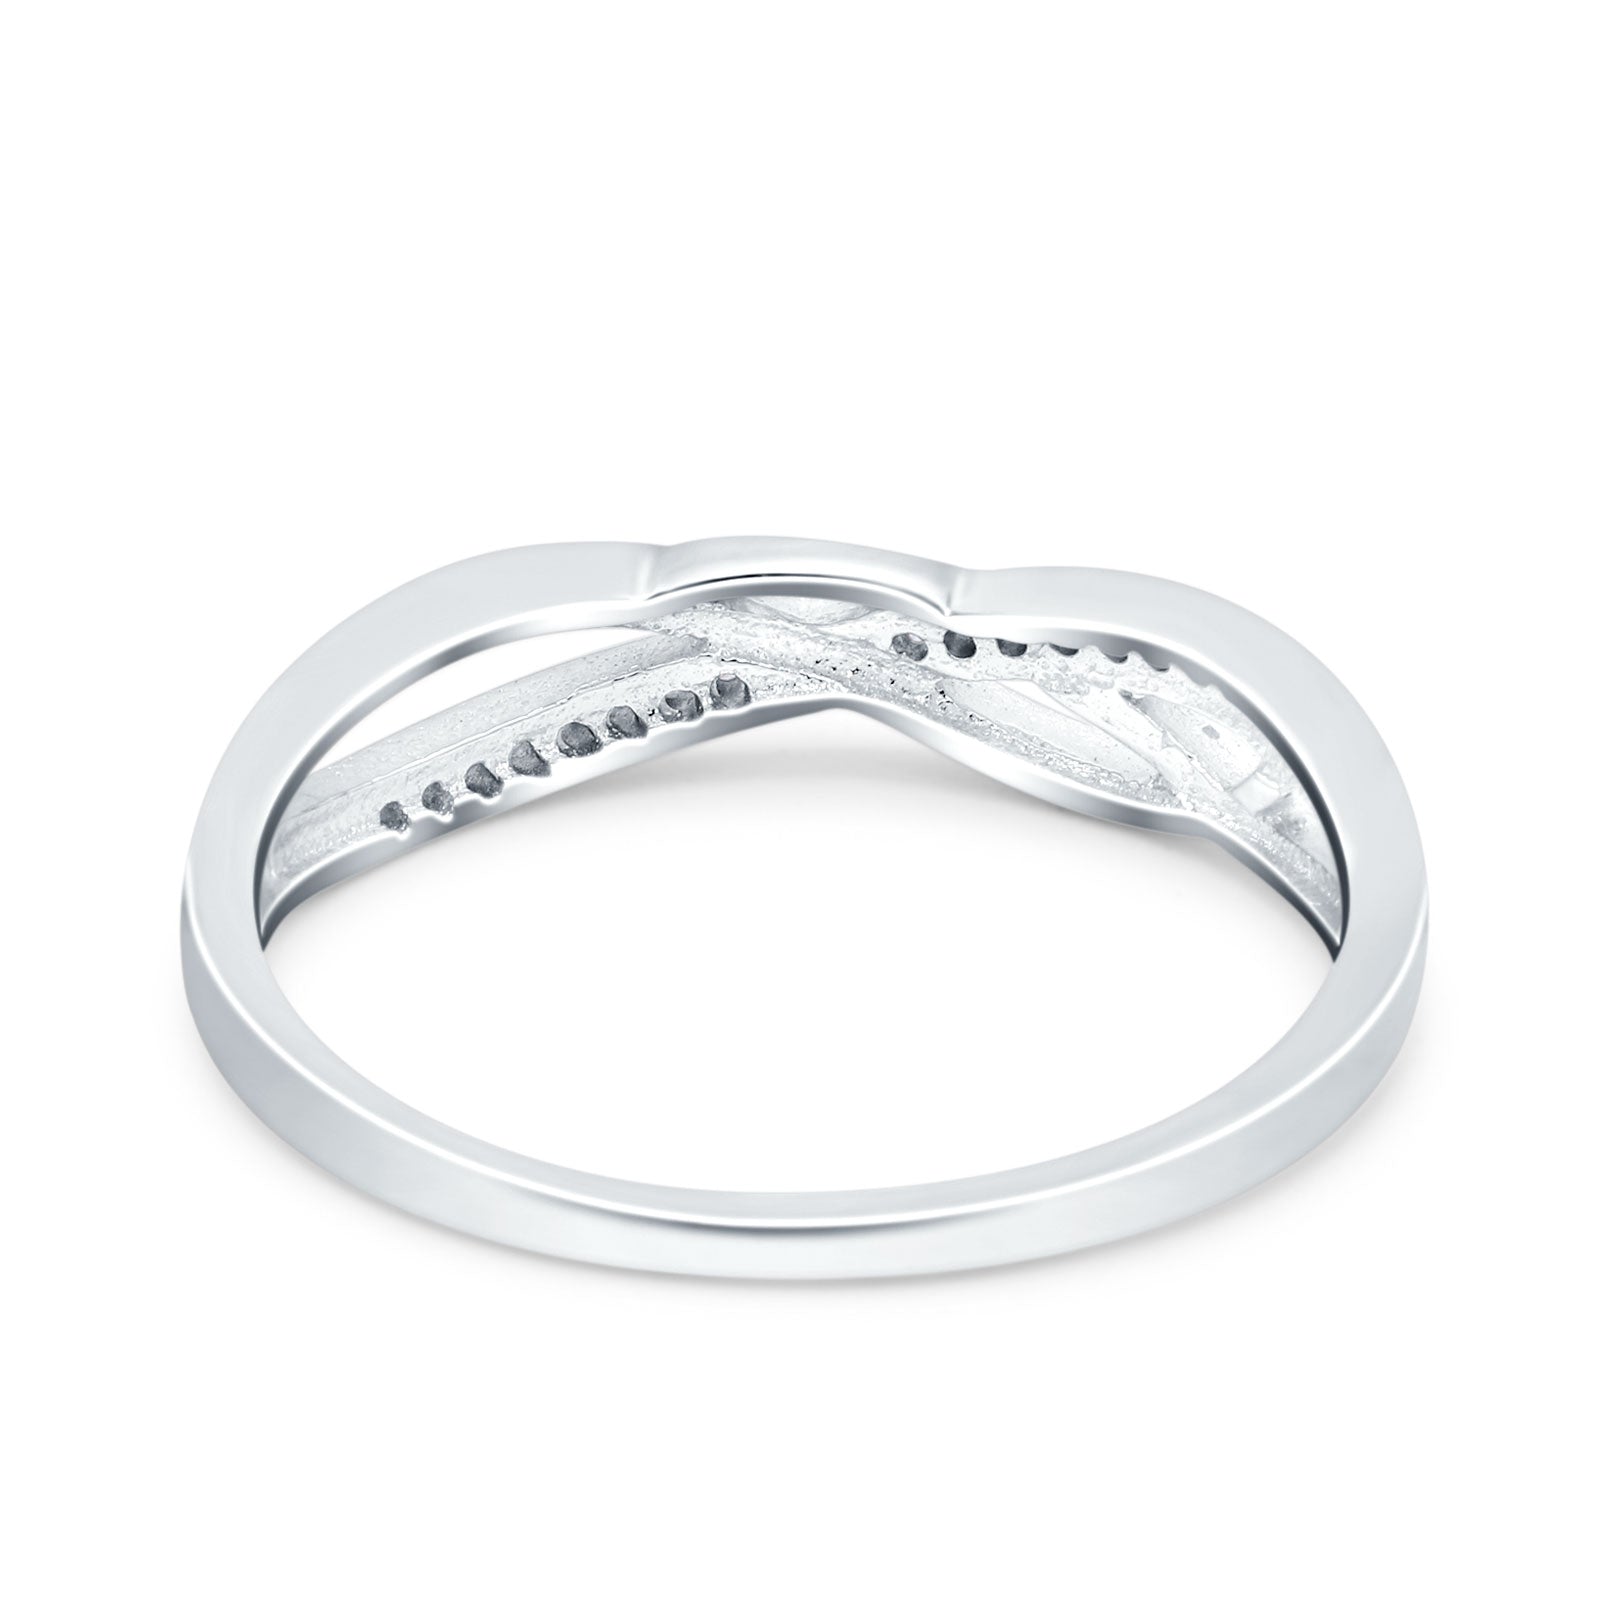 14K Gold Round Shape Infinity Twisted Half Eternity Simulated CZ Wedding Engagement Ring